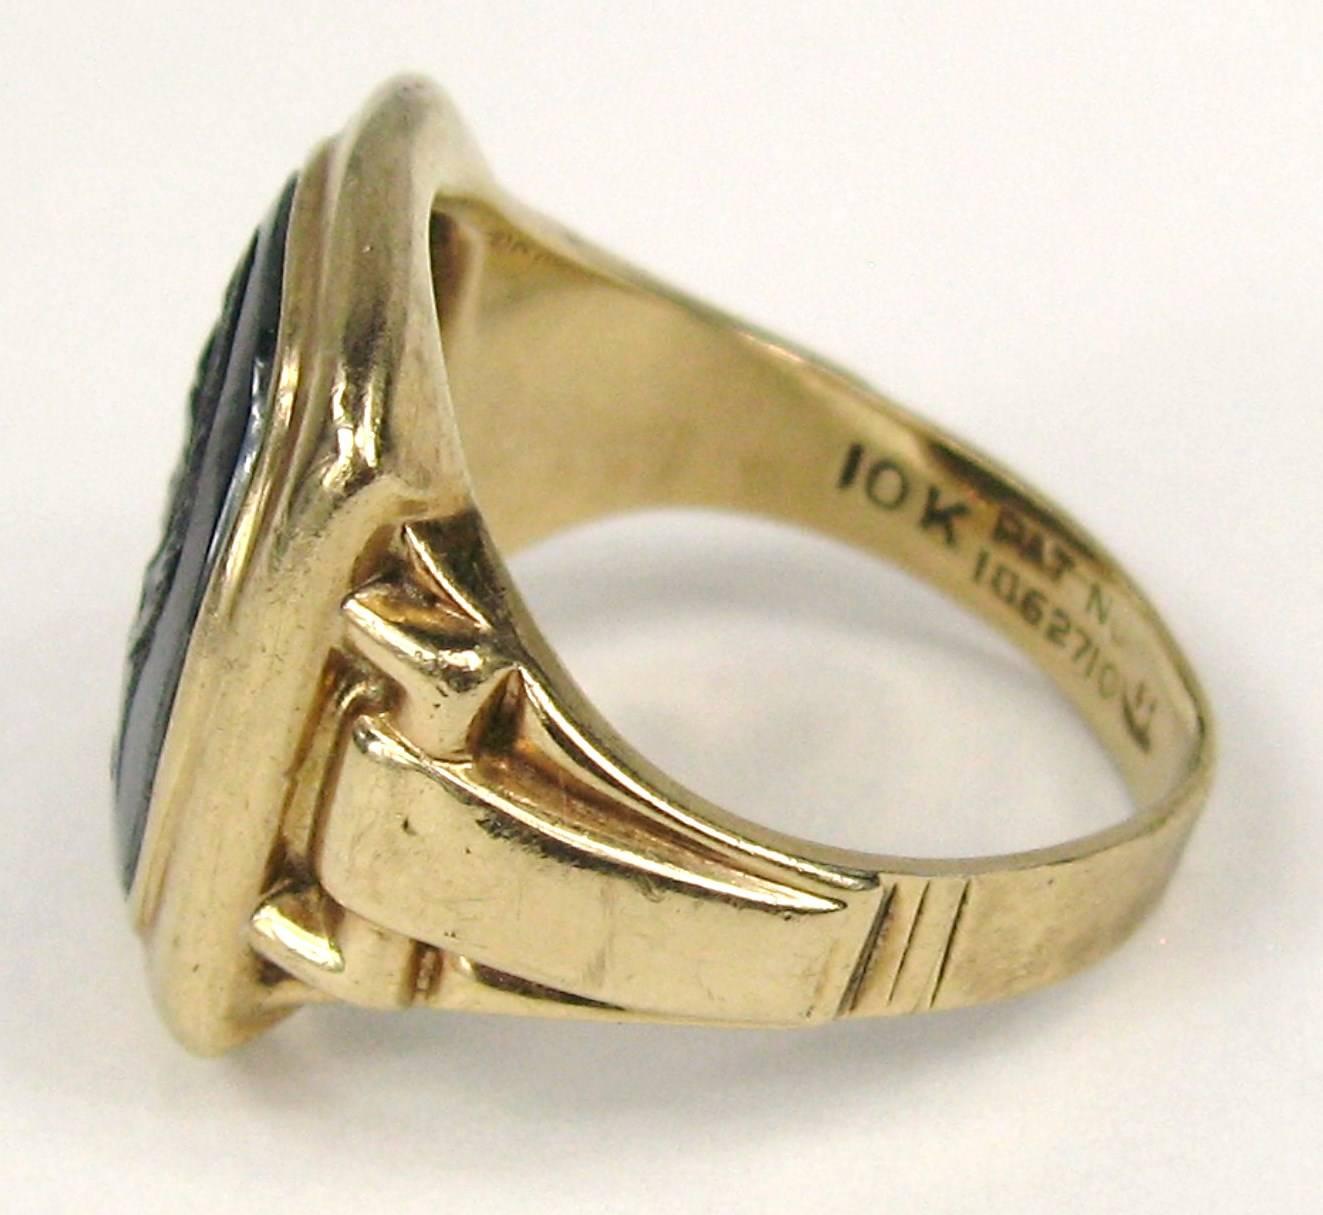 hematite centurion ring meaning